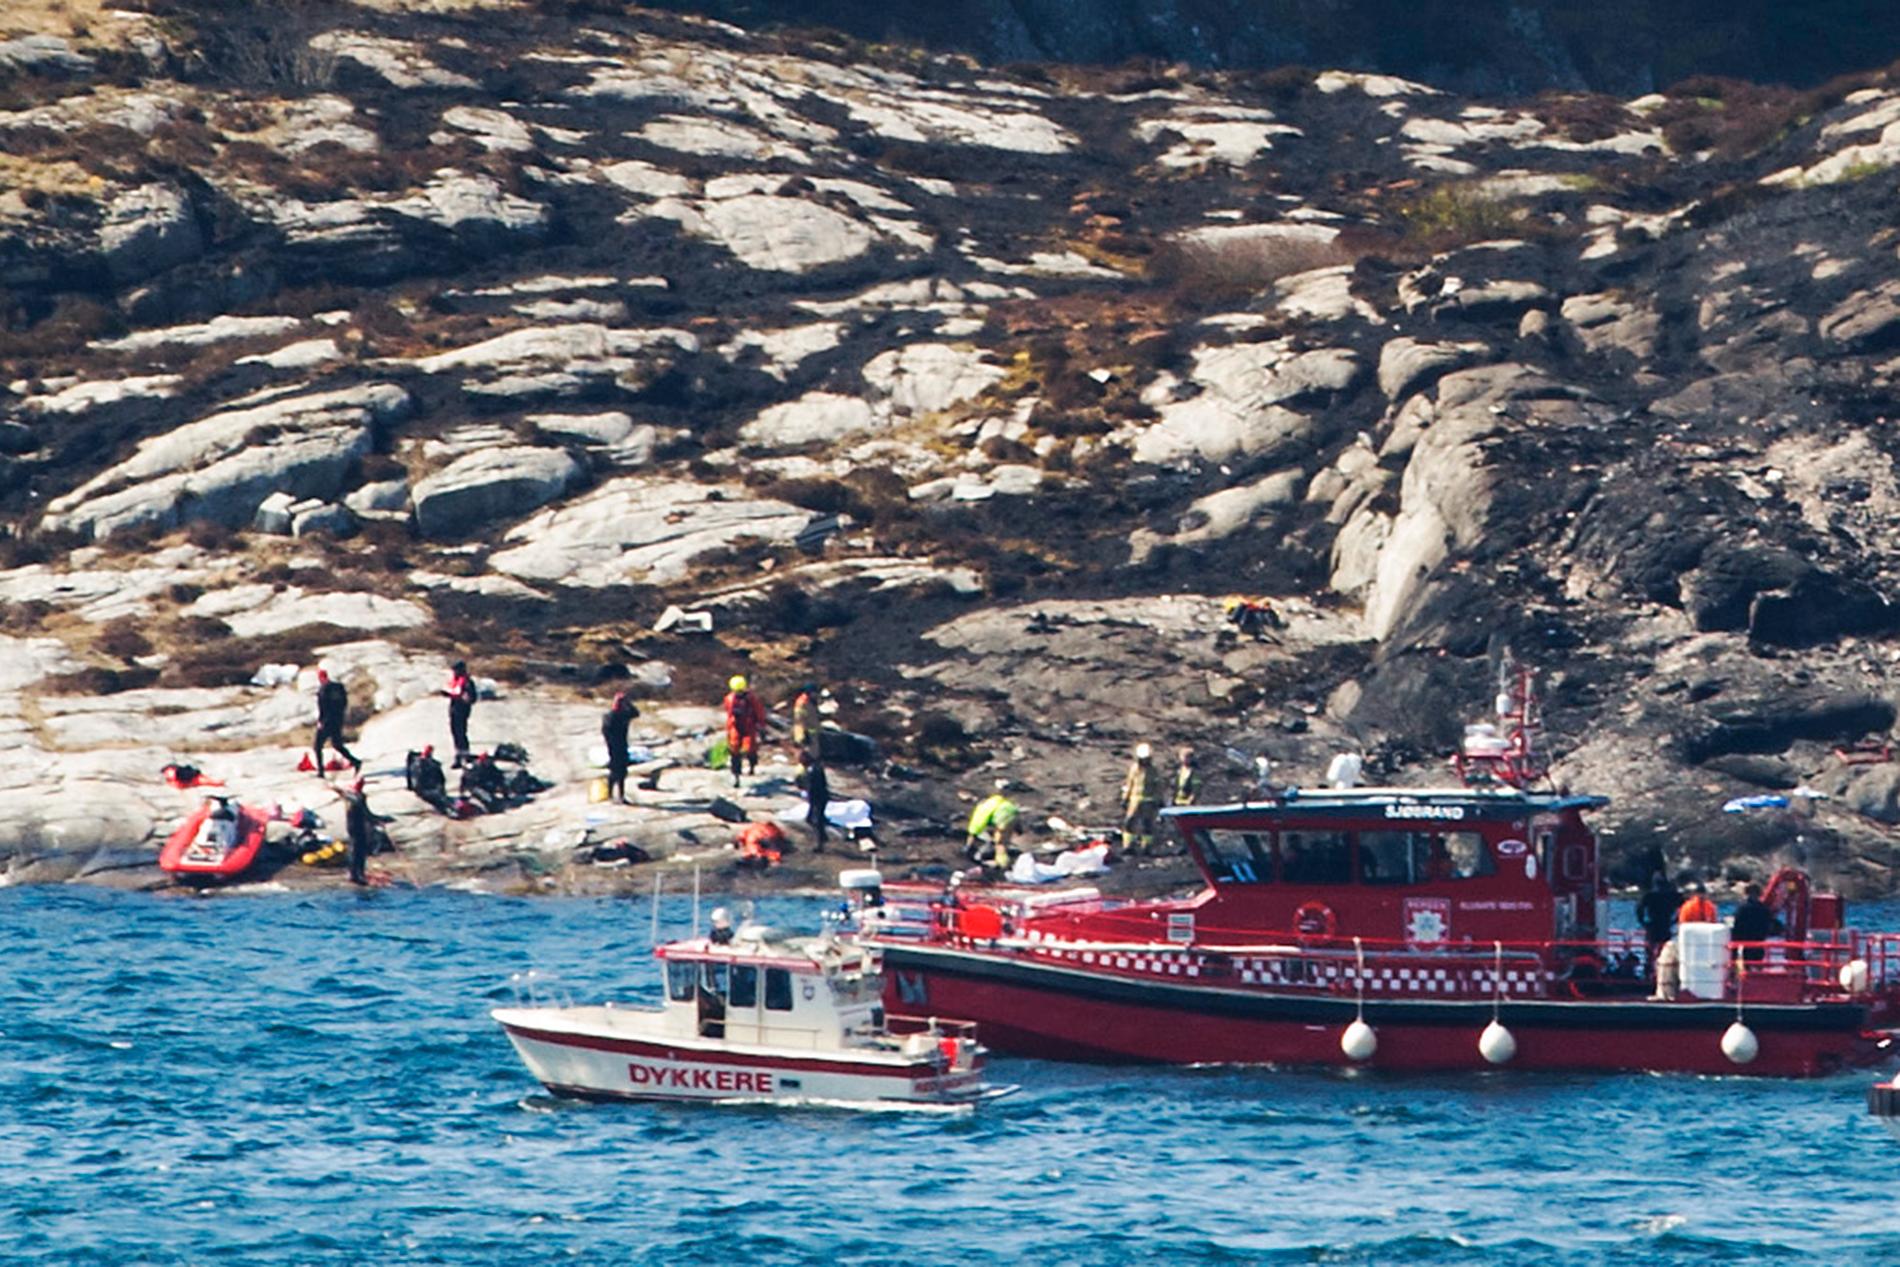 ULYKKESSTEDET: 13 personer omkom da et helikopter styrtet ved Turøy 29. april i fjor.